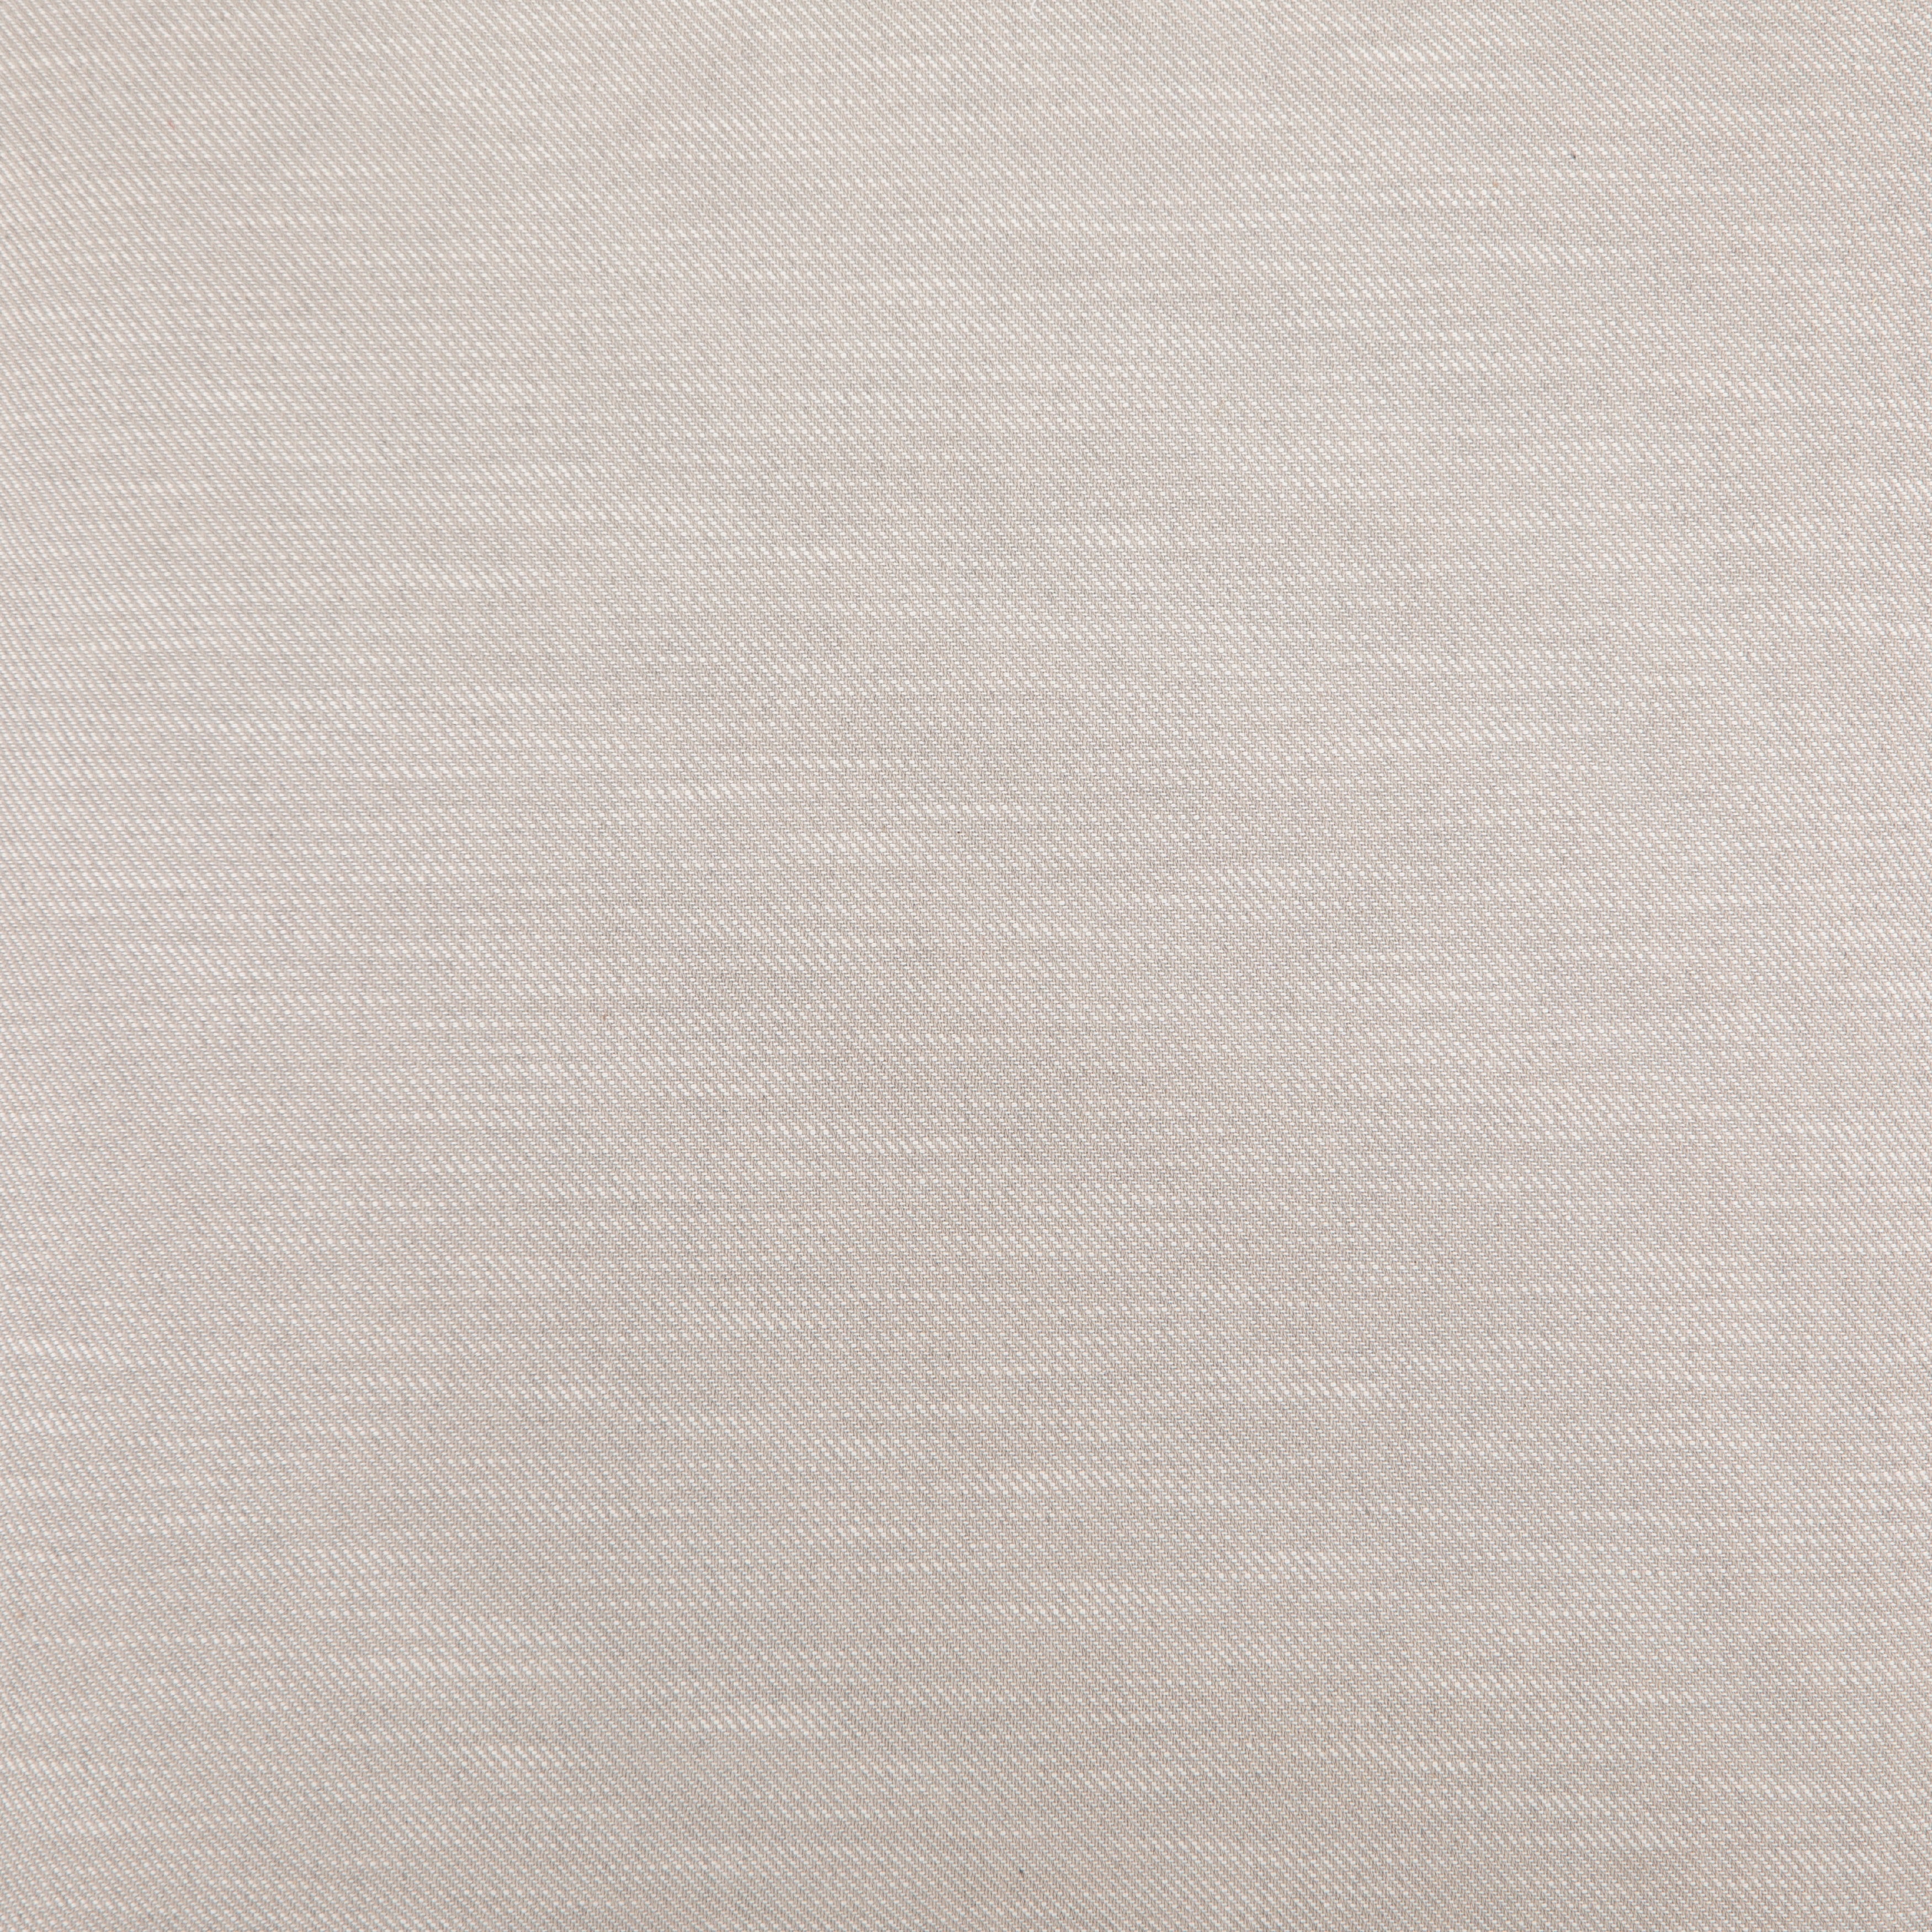 Ashby Oatmeal Fabric with Rustic Oak Veneer | Apollo Chair | Valley Ridge Furniture